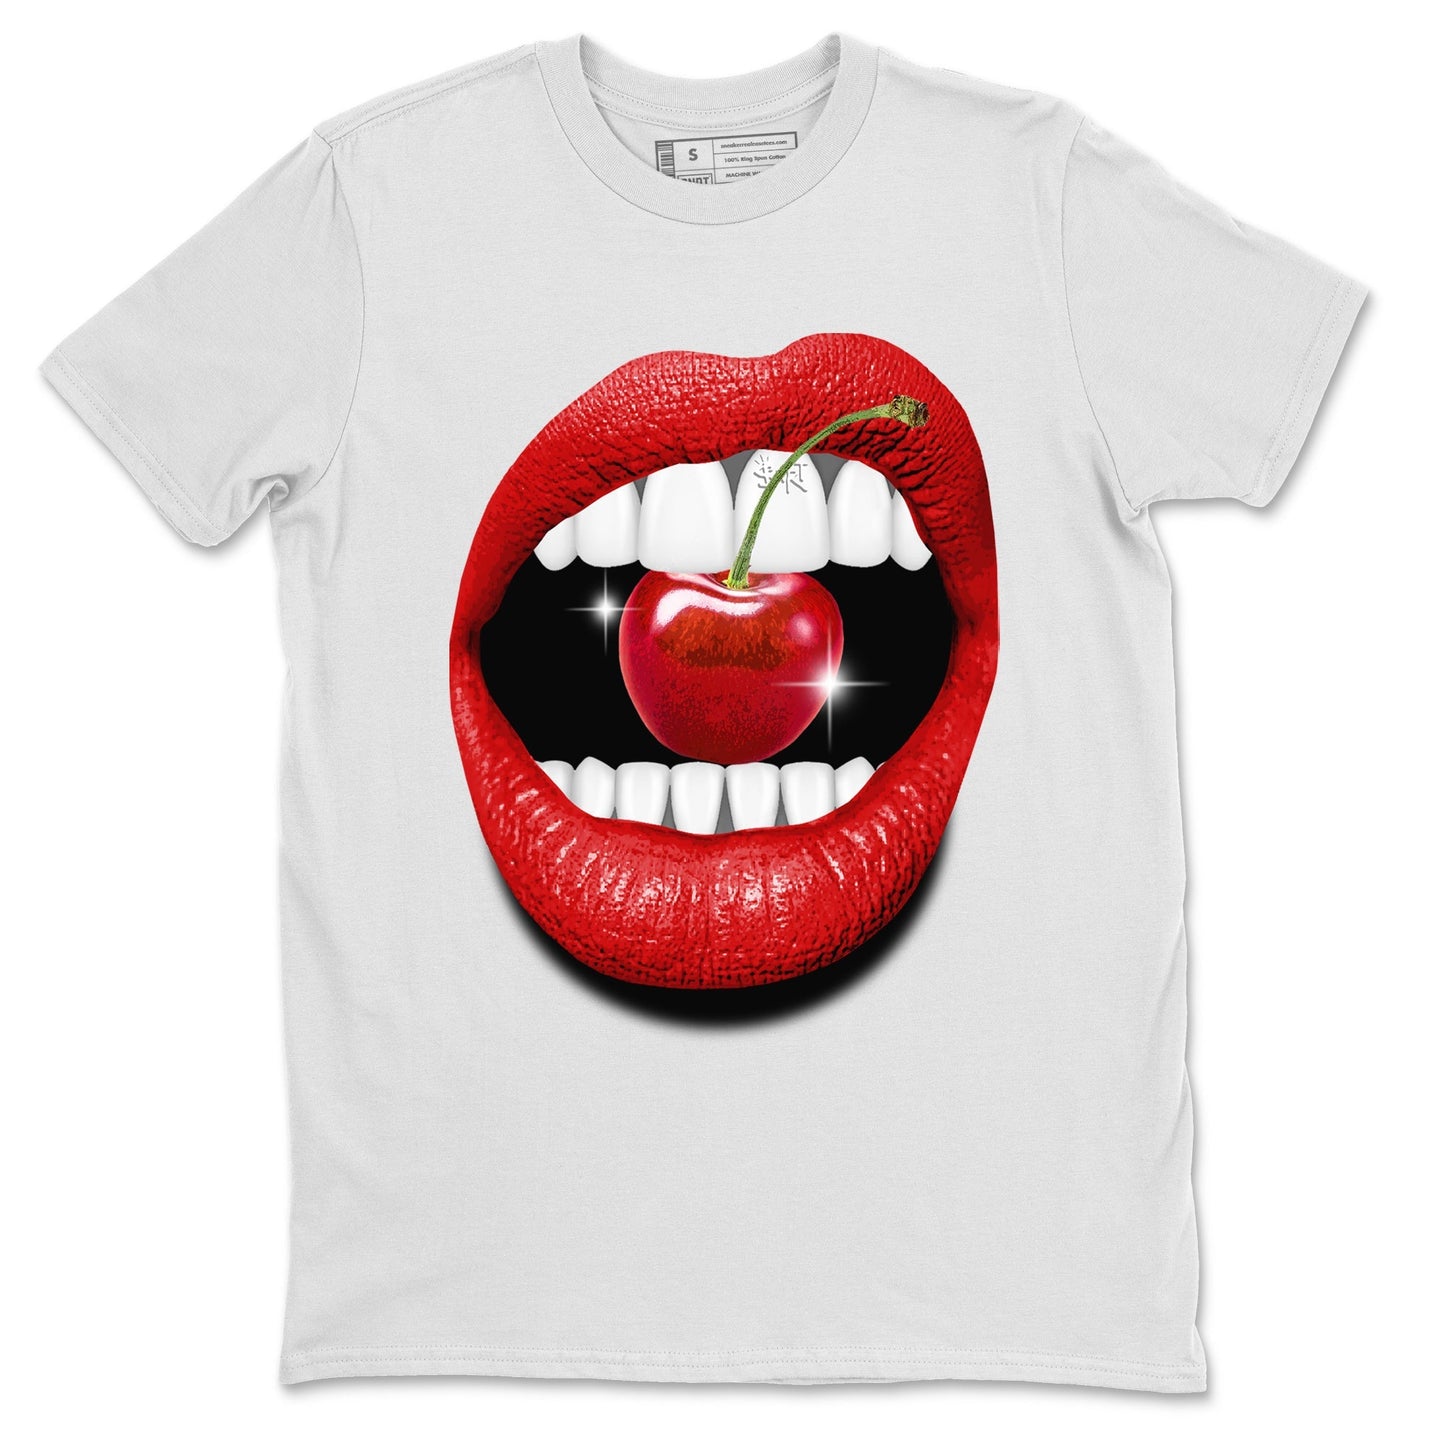 12s Cherry Sneaker Match Tees Lips Cherry Sneaker Shirts Air Jordan 12 Cherry Sneaker Release Tees Unisex Shirts White 2